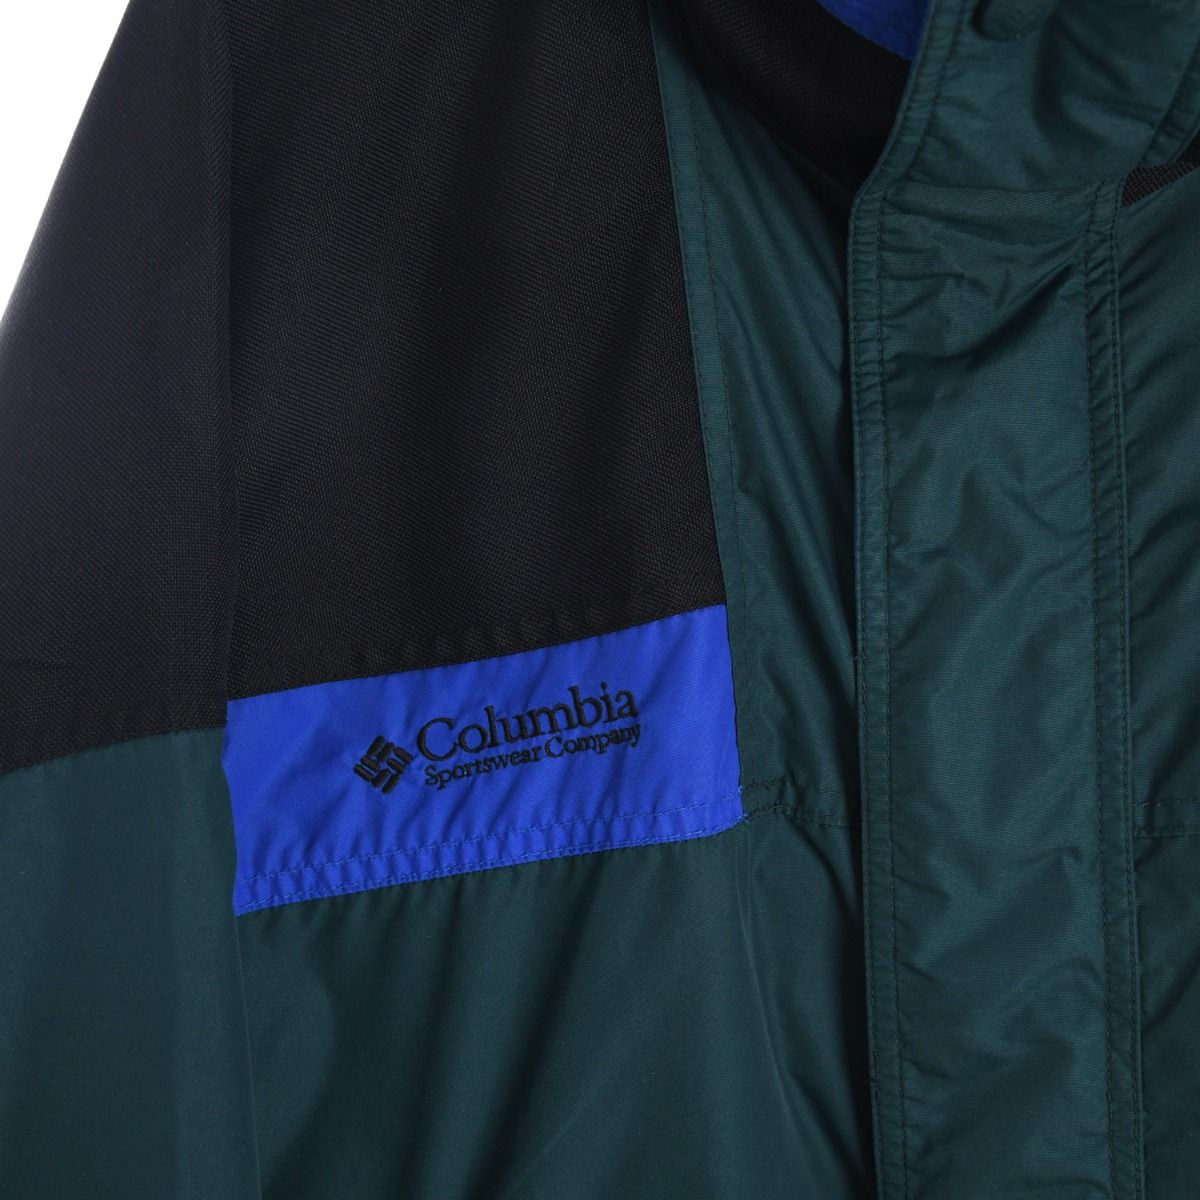 Columbia 1990s Green Jacket